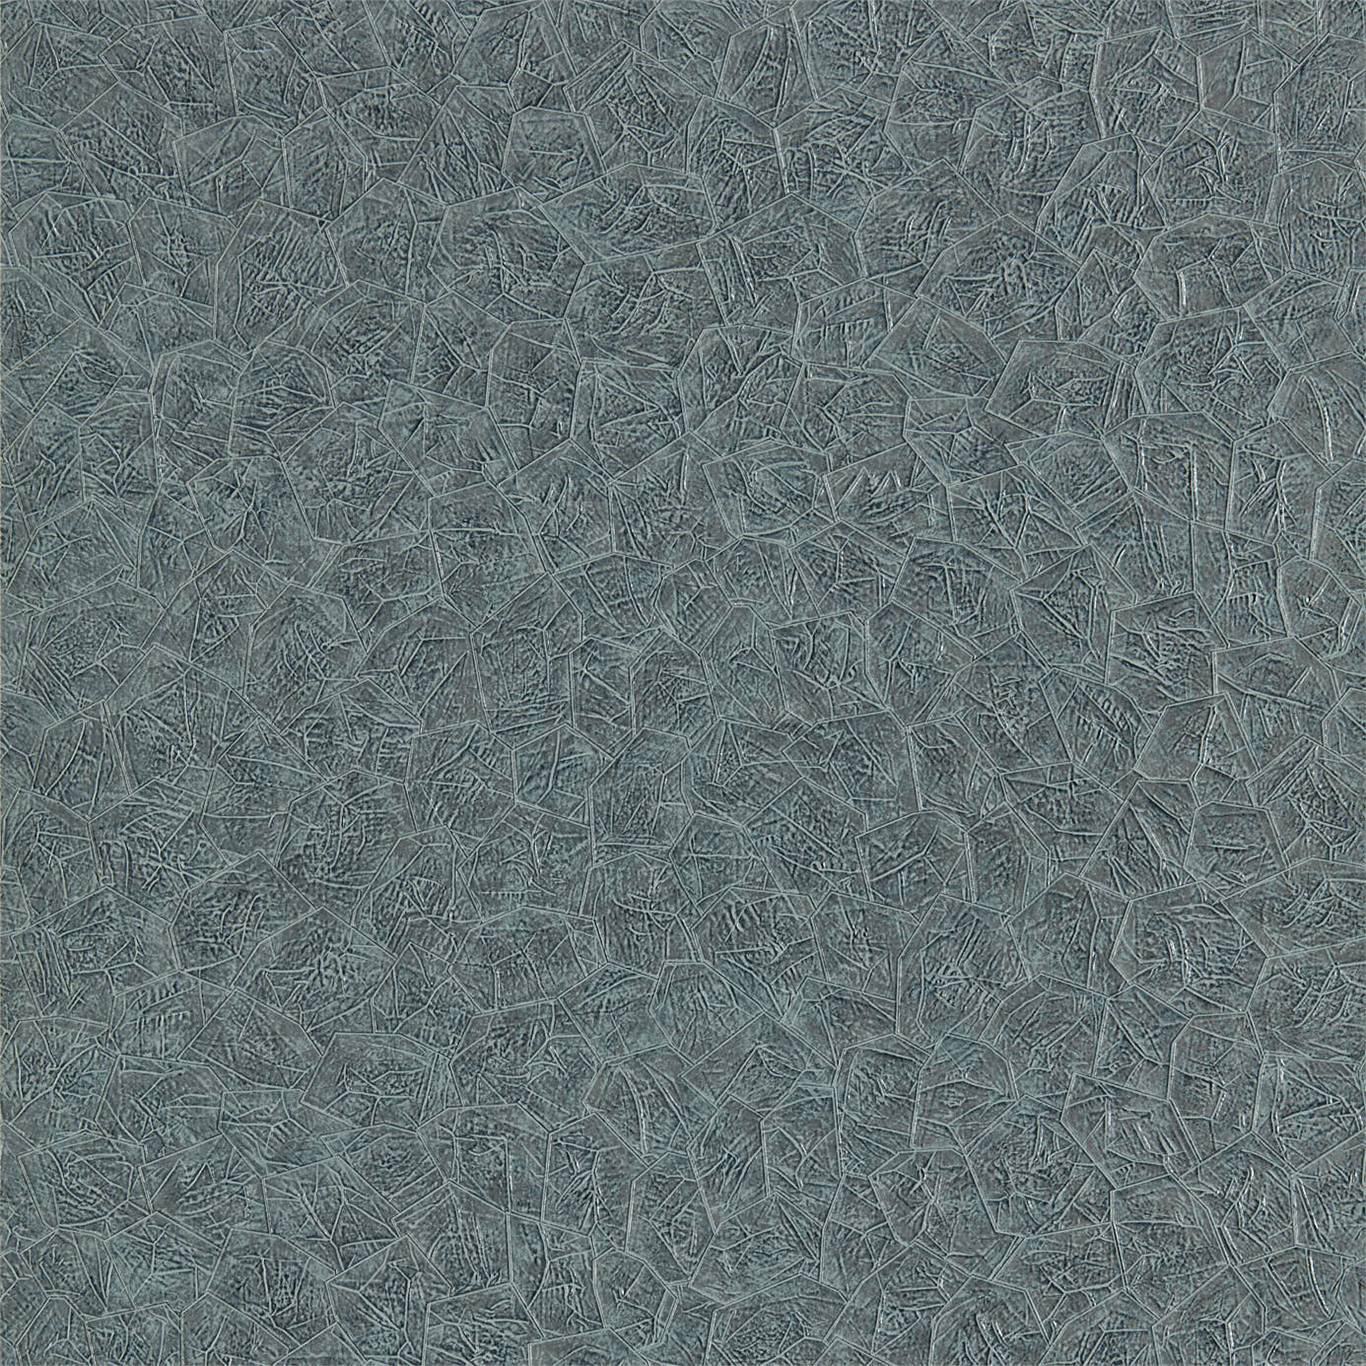 Kimberlite Saphire Wallpaper EANW112566 by Harlequin